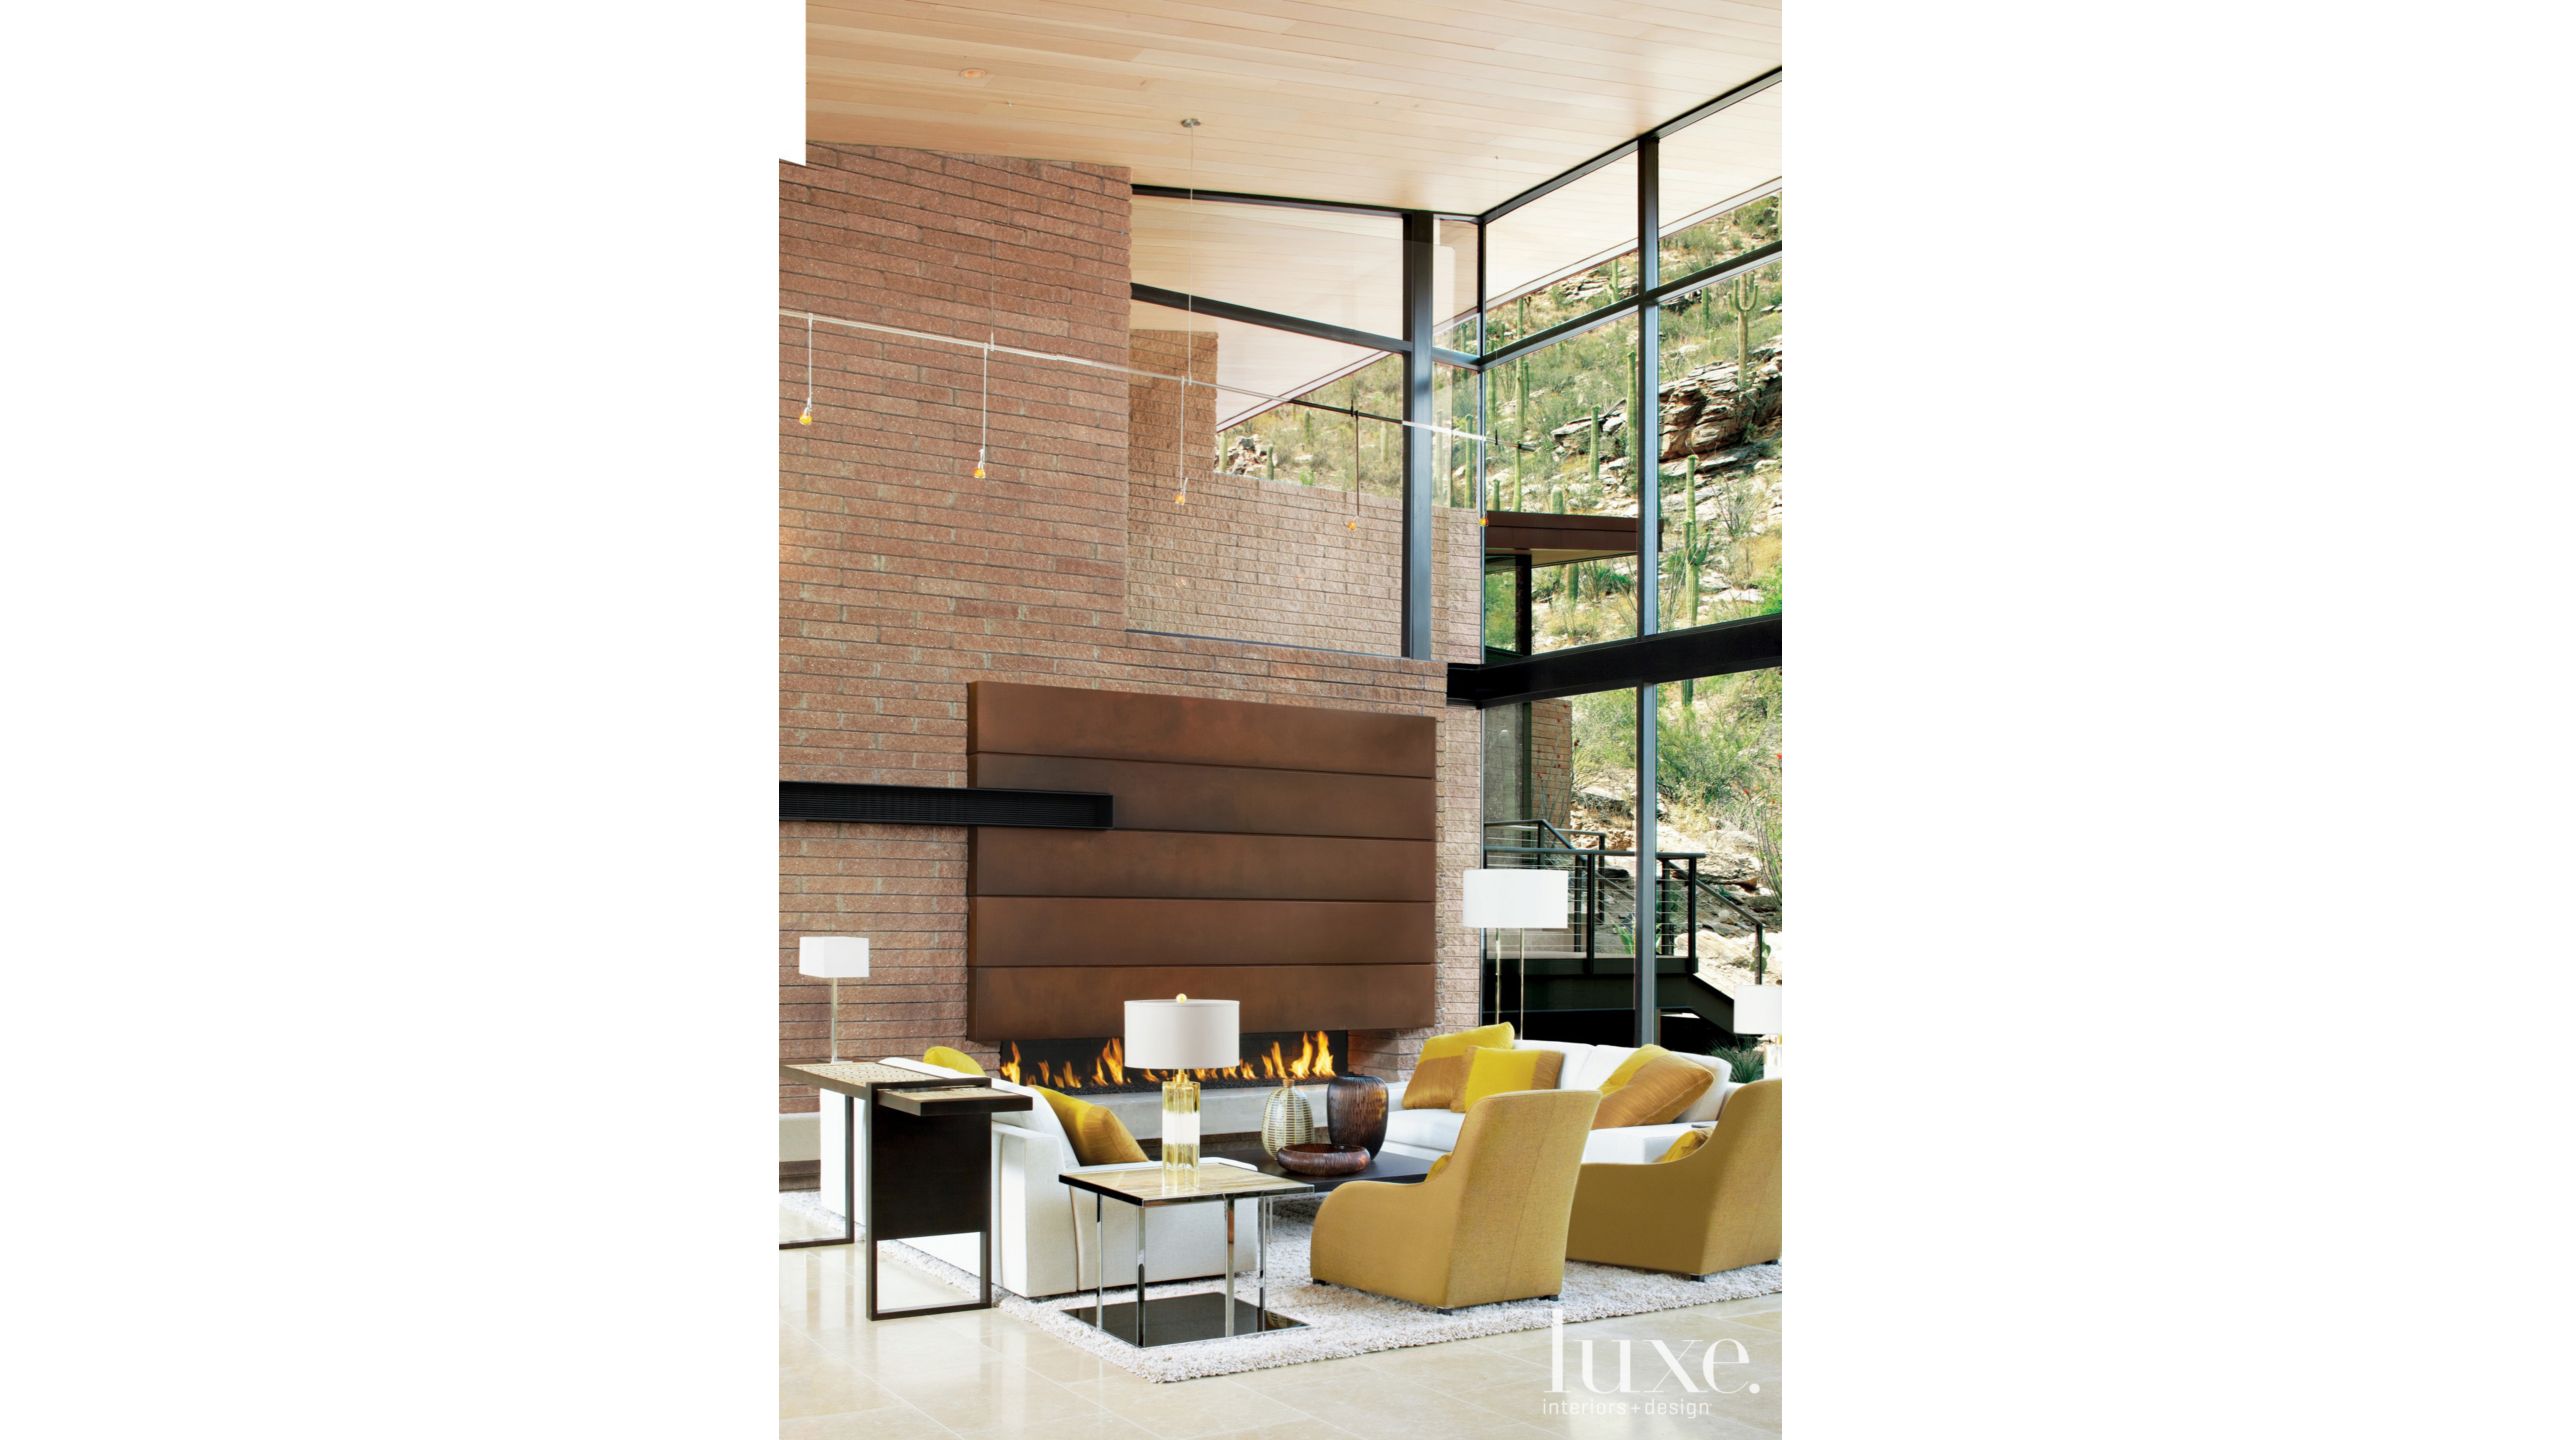 Luxe Interiors Design Official Site Architecture